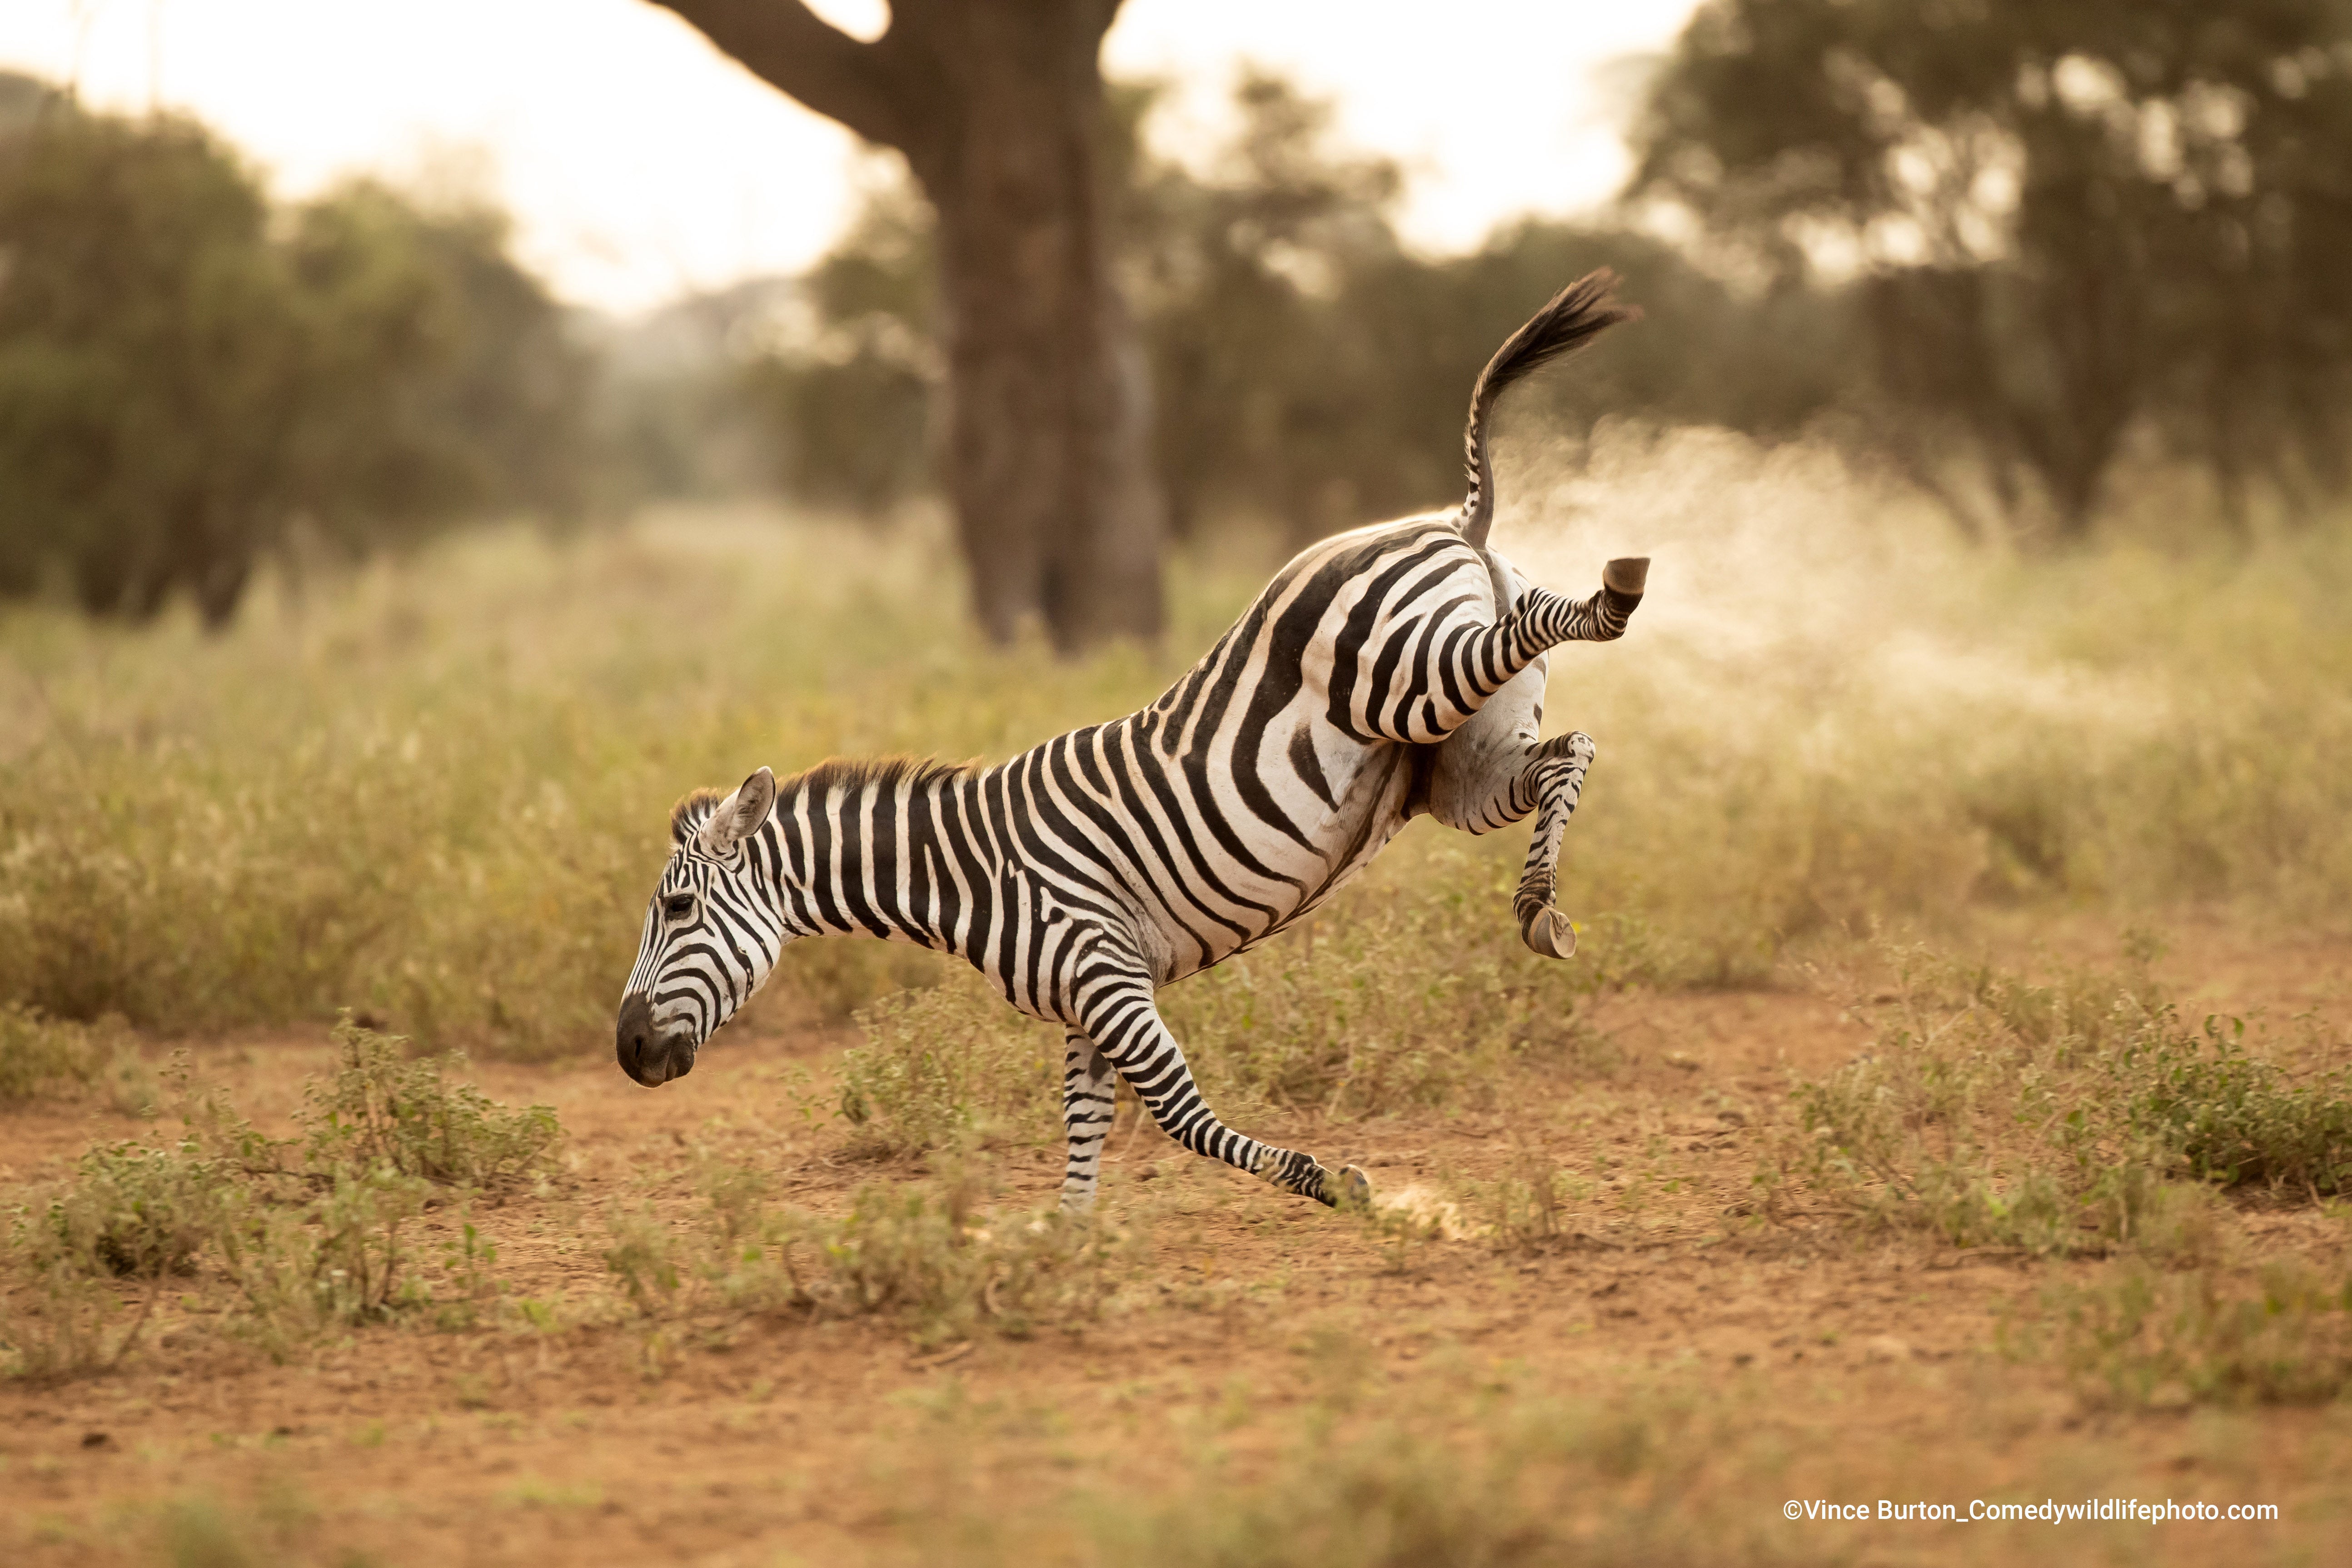 A zebra in an awkward position in Kenya. (Photo: © Vince Burton / Comedywildlifephoto.com.)